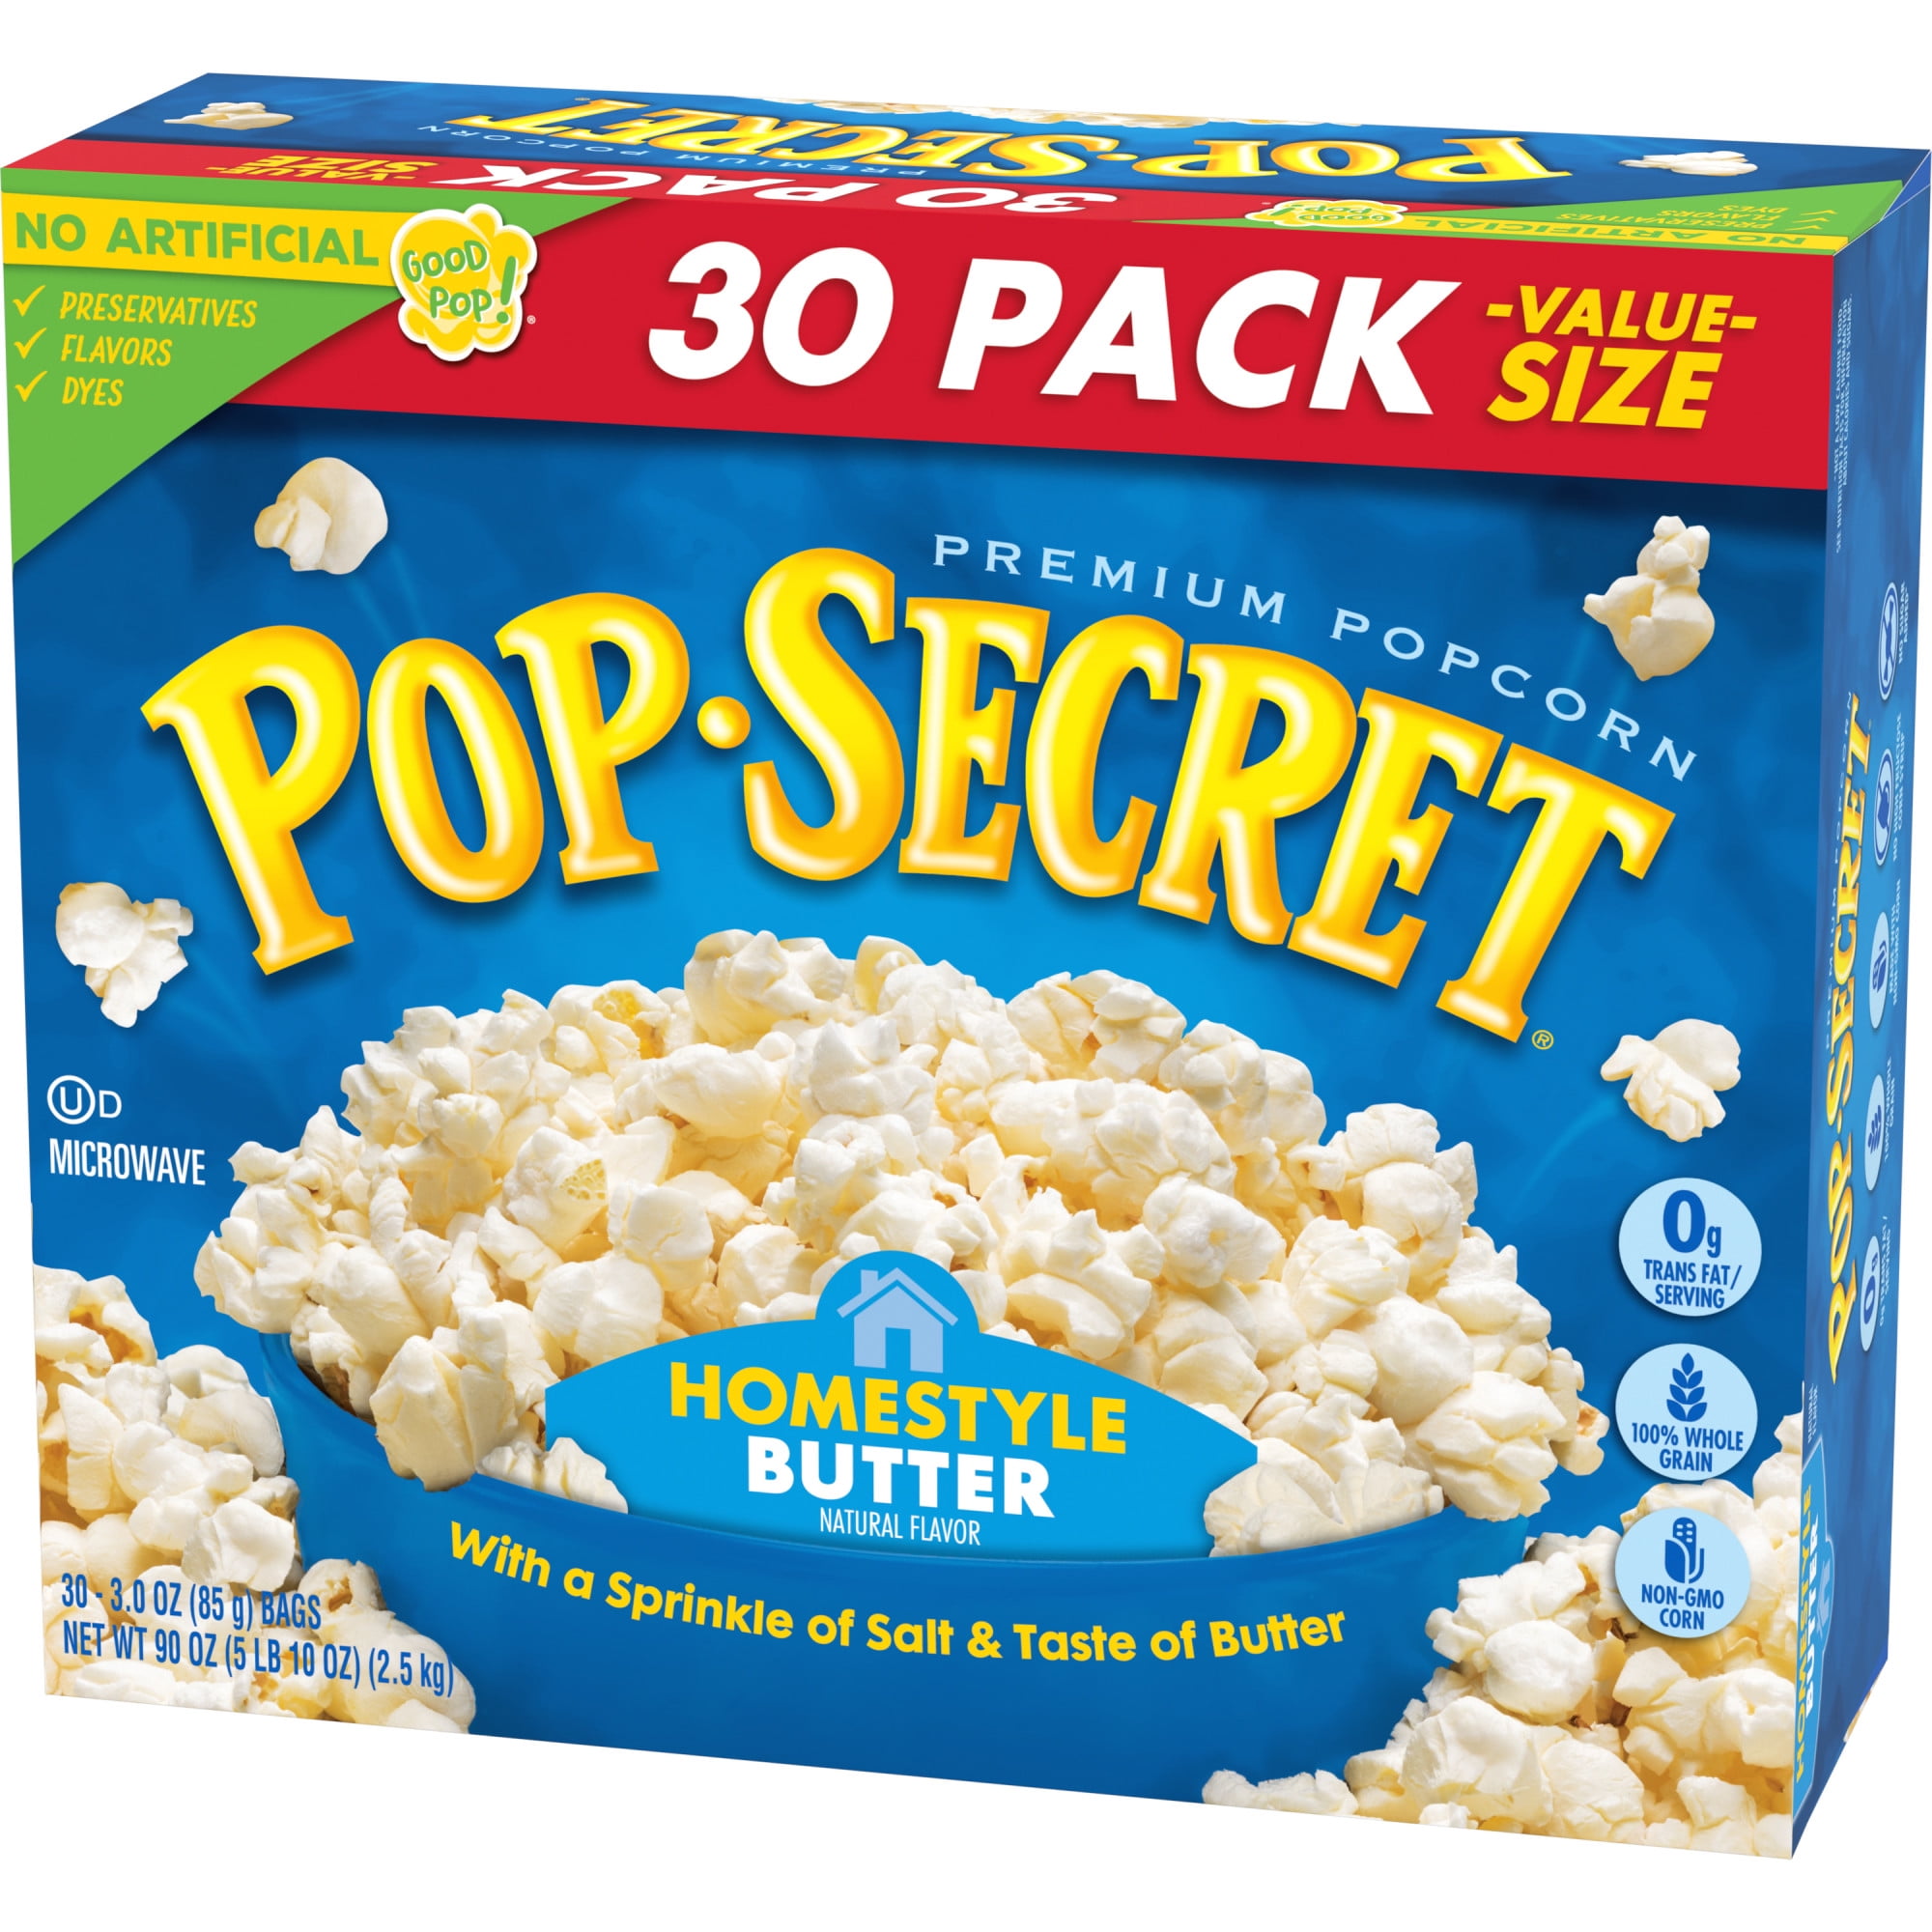 Pop-Secret Popcorn, Premium, Homestyle Butter, Value Size, 30 Pack - 30 pack, 3.0 oz bags